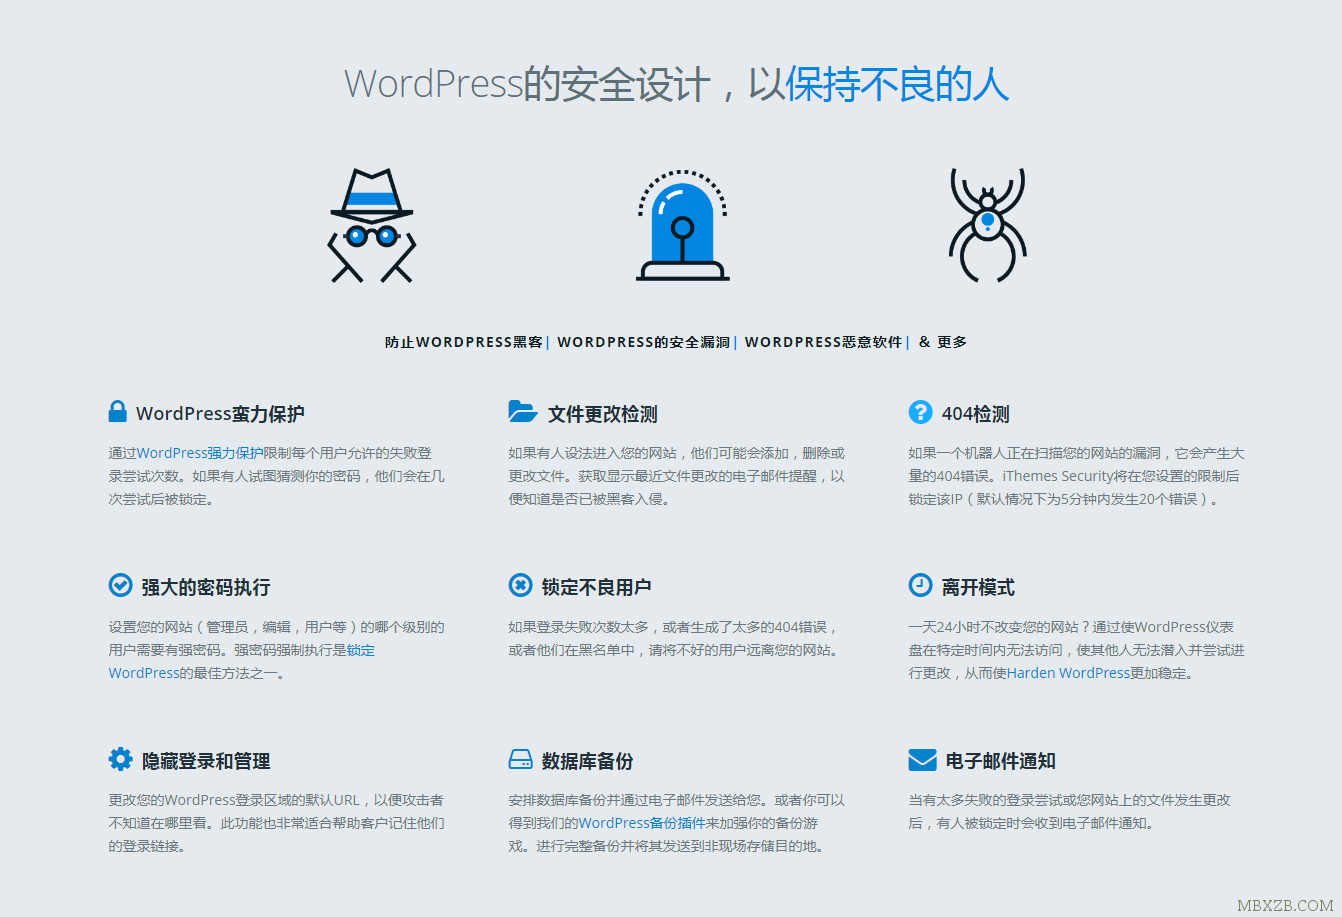 WordPress 最强安全防护插件iThemes Security Pro vv7.3.4 汉化版